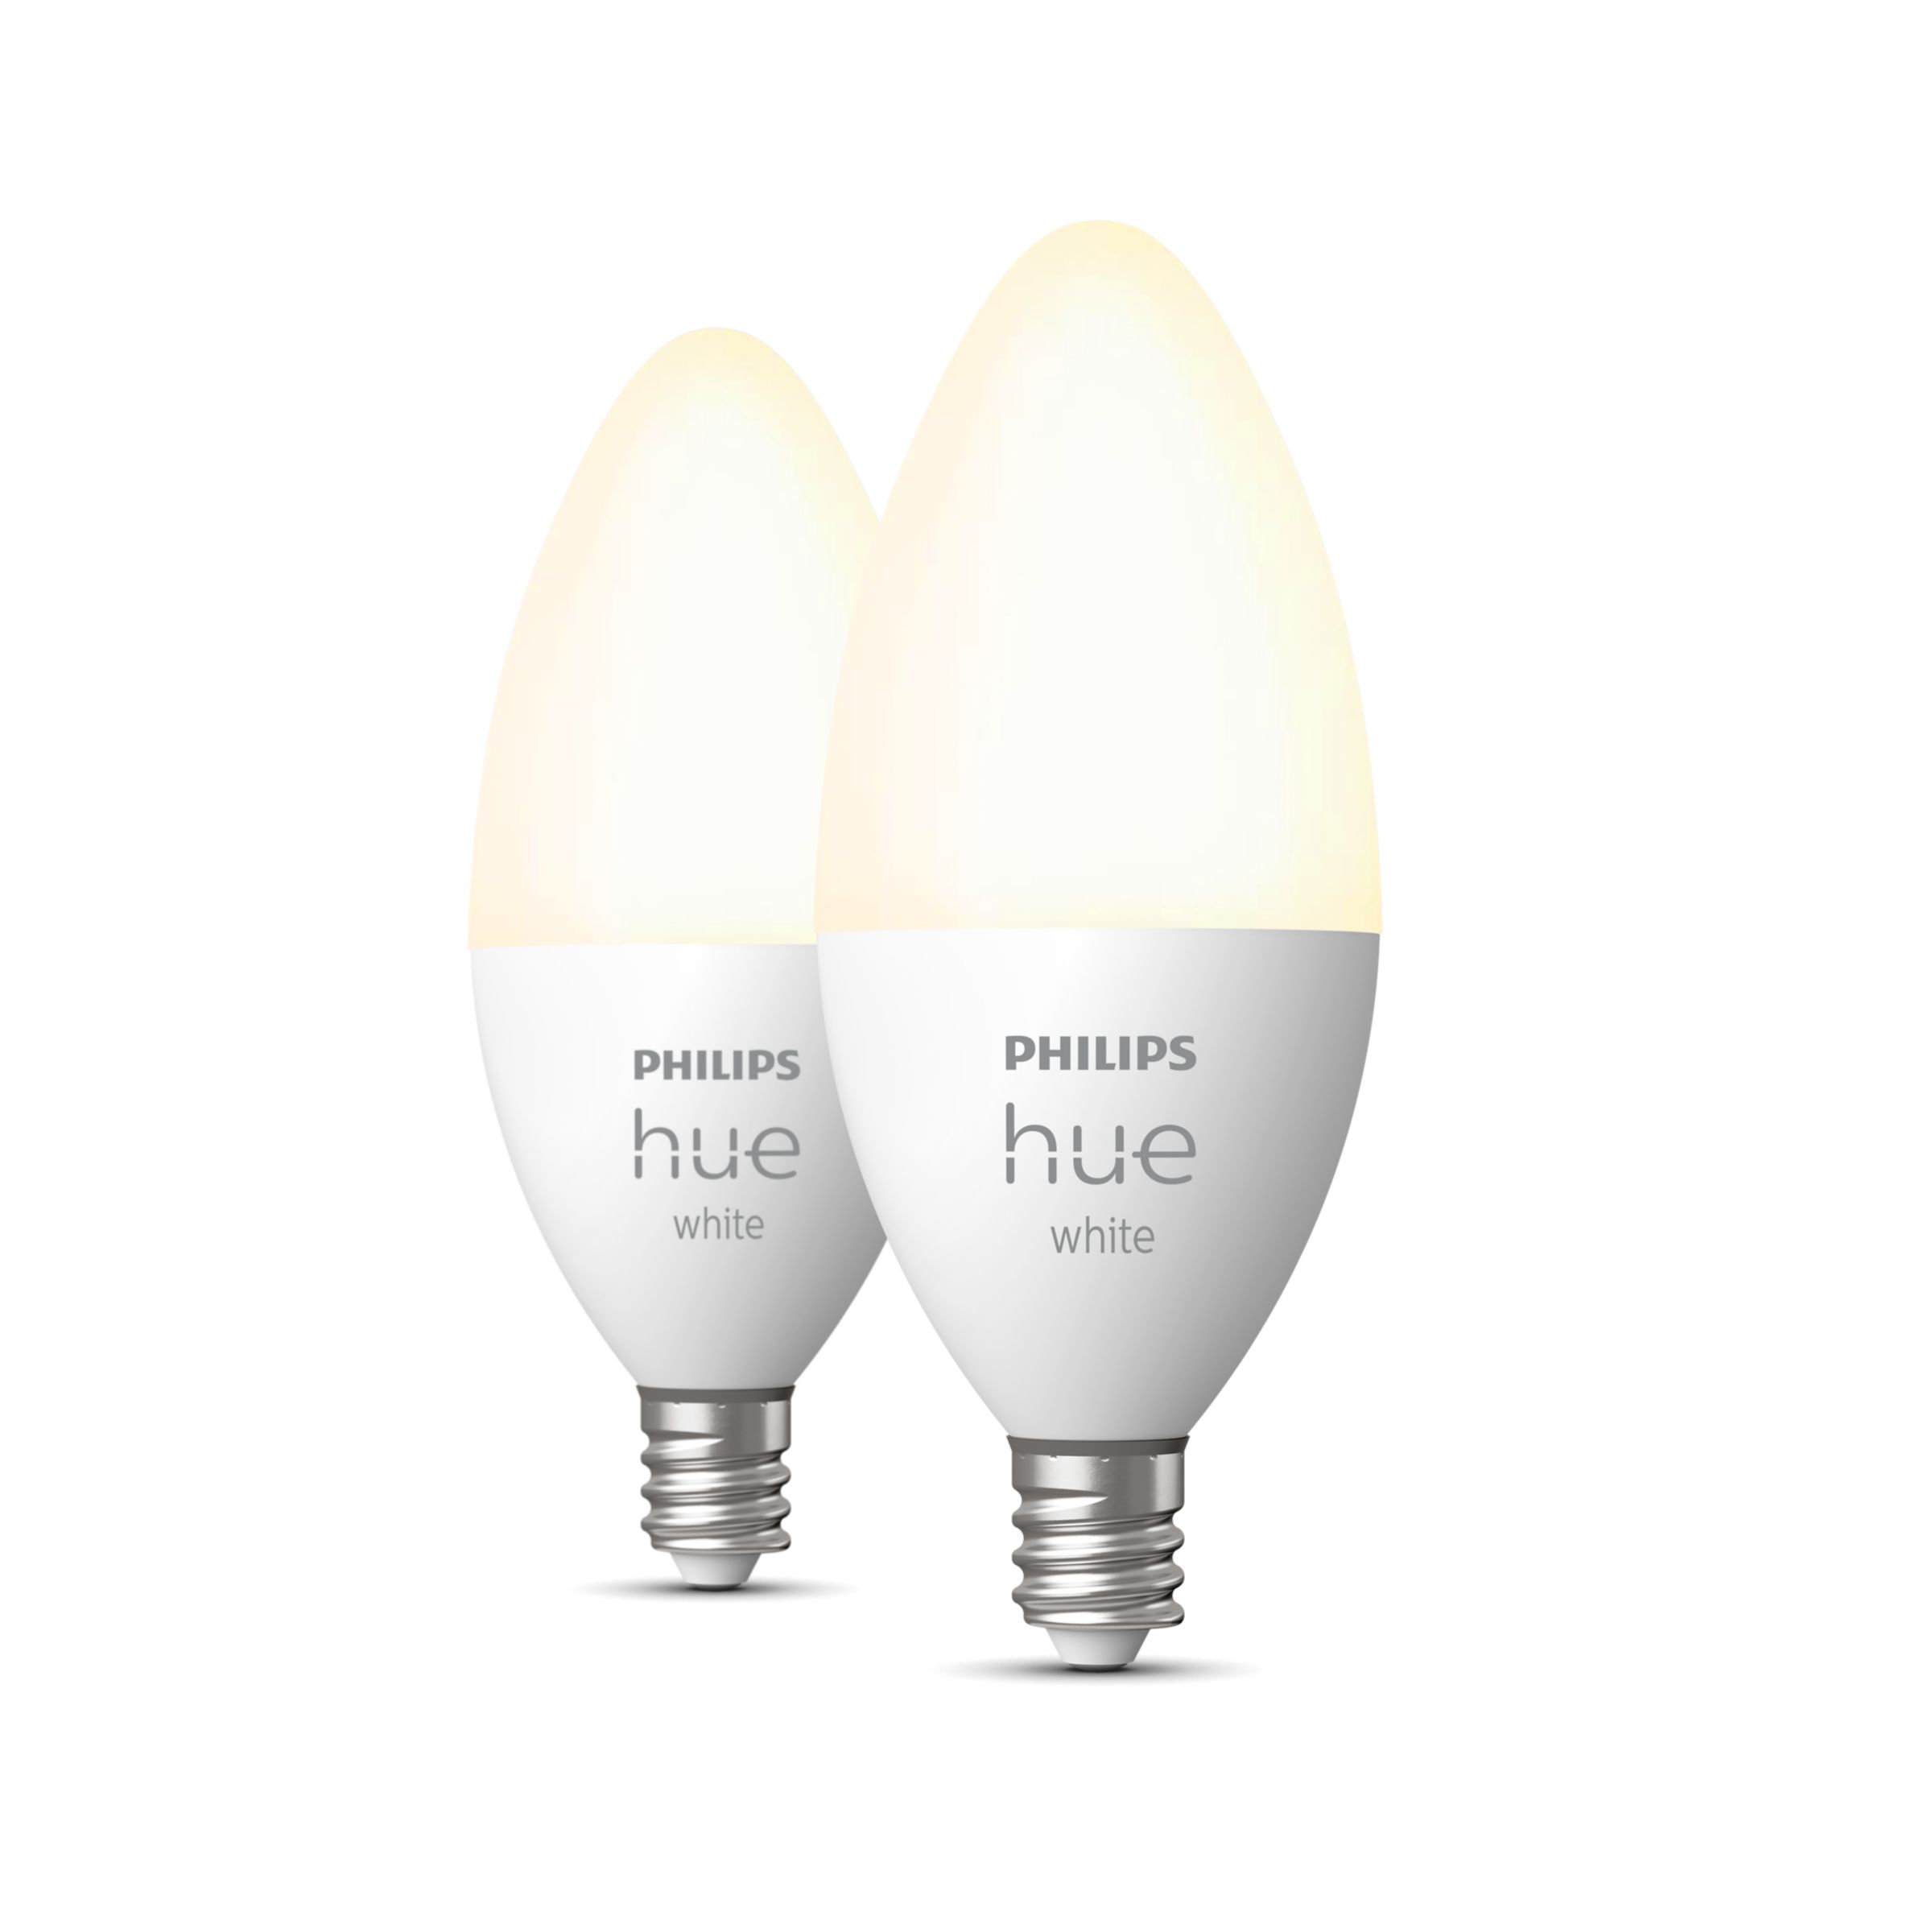 Philips Hue White 9W E27 bombilla LED, set de 2